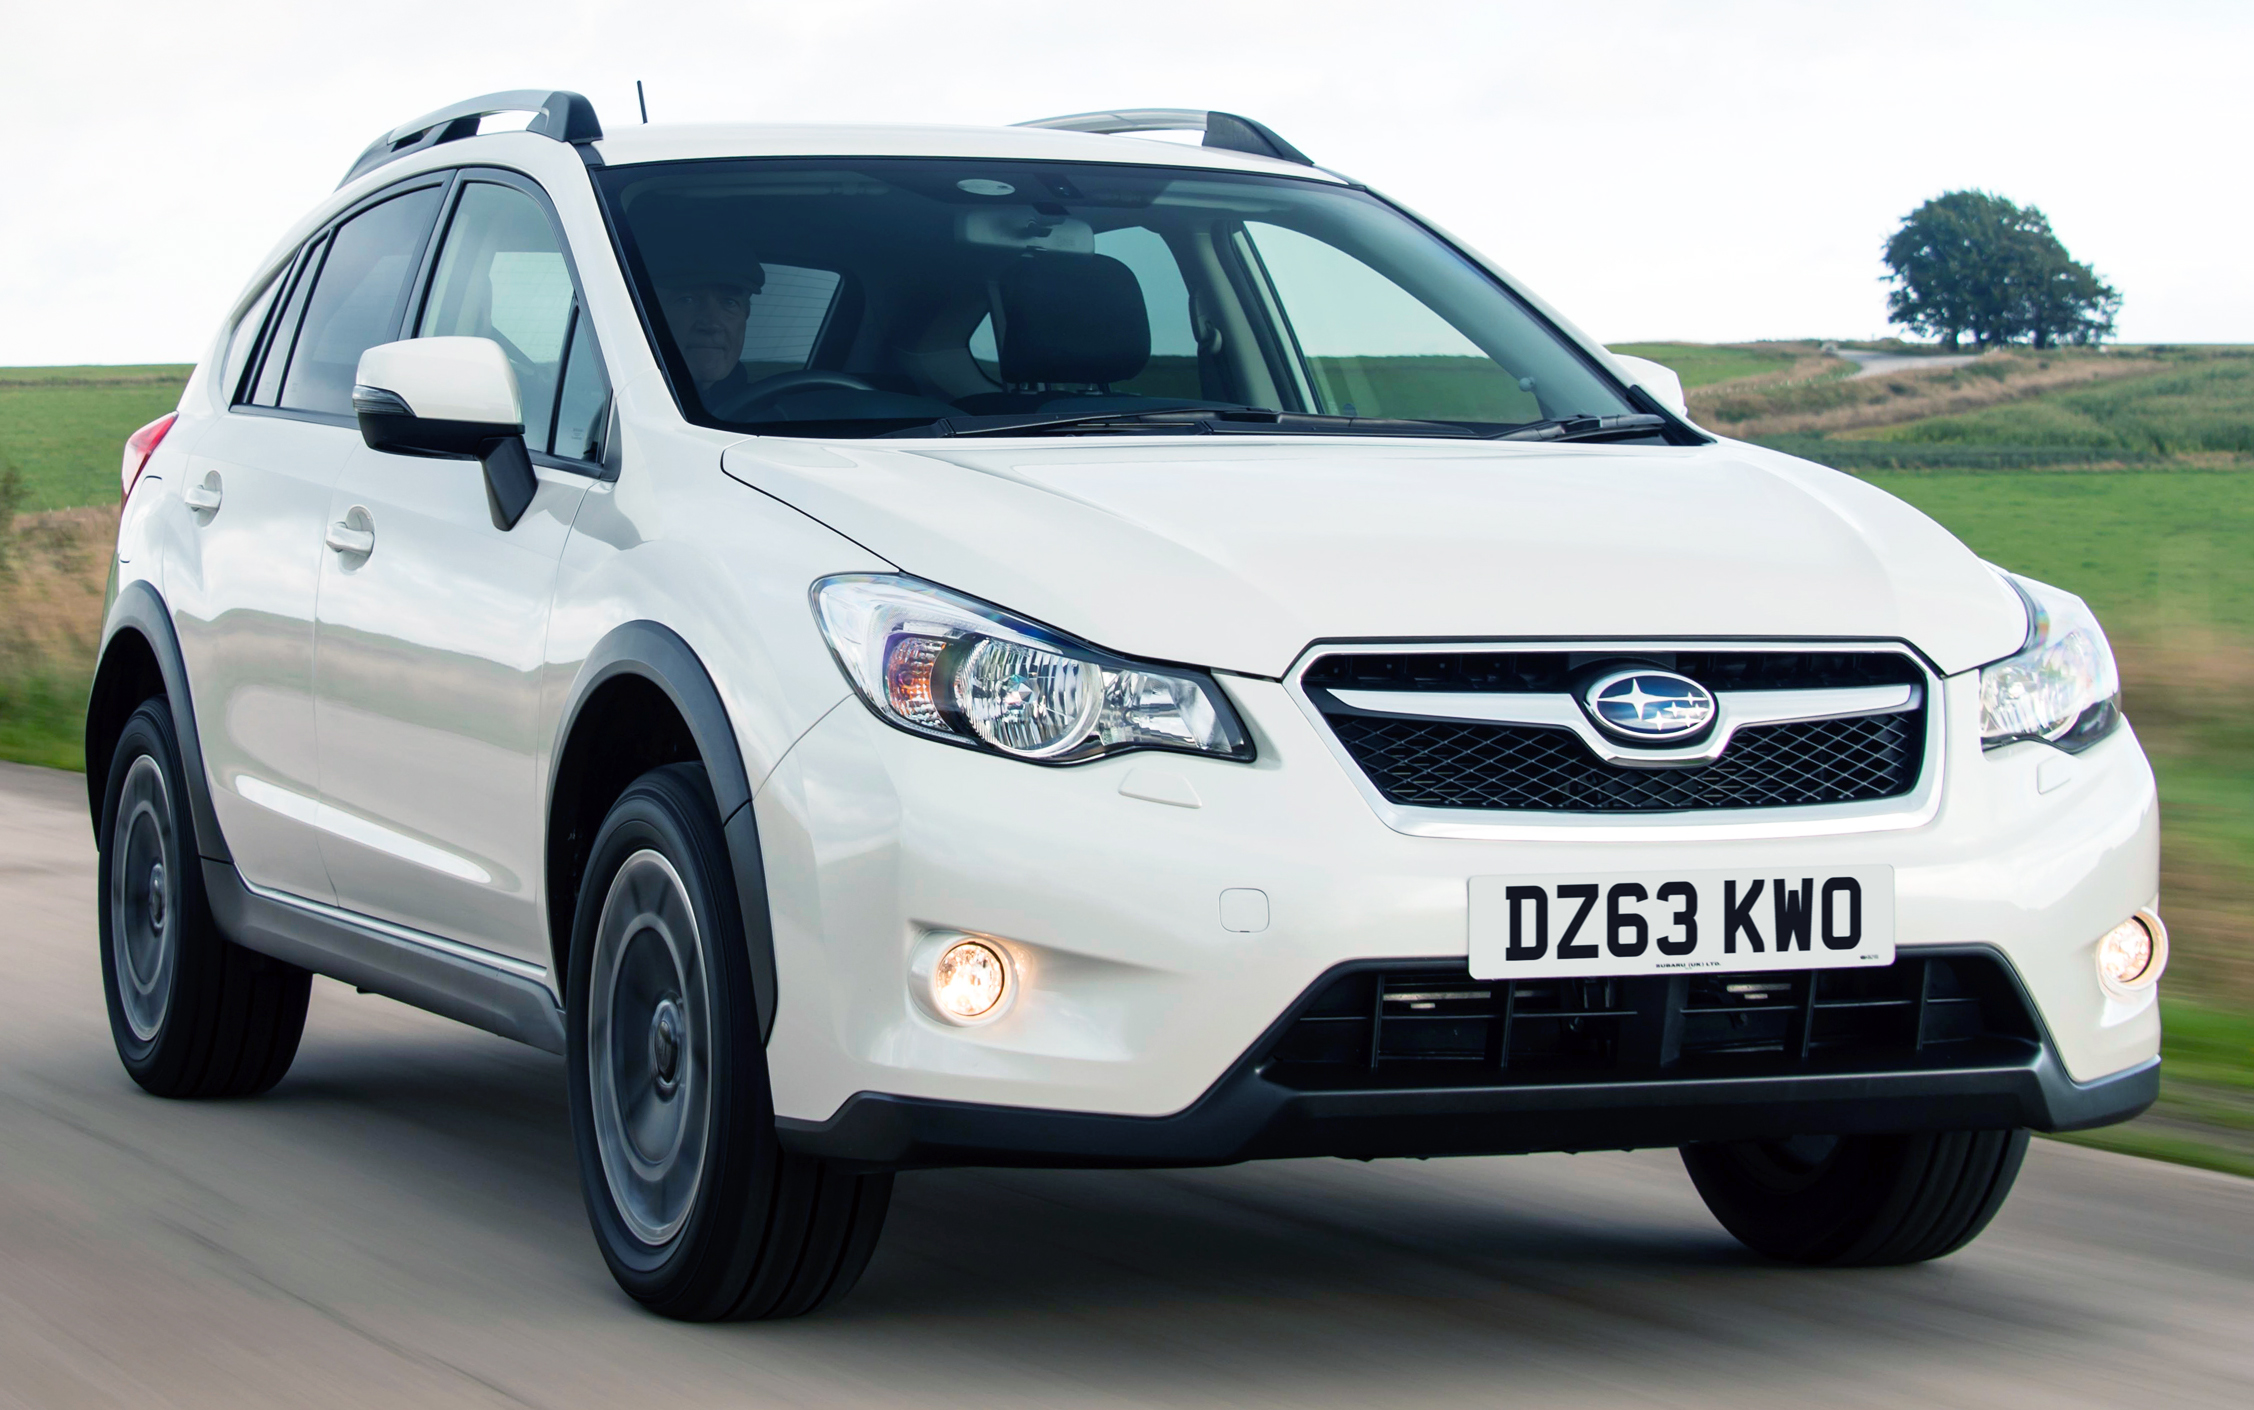 Subaru XV – UK models get improvements for 2014